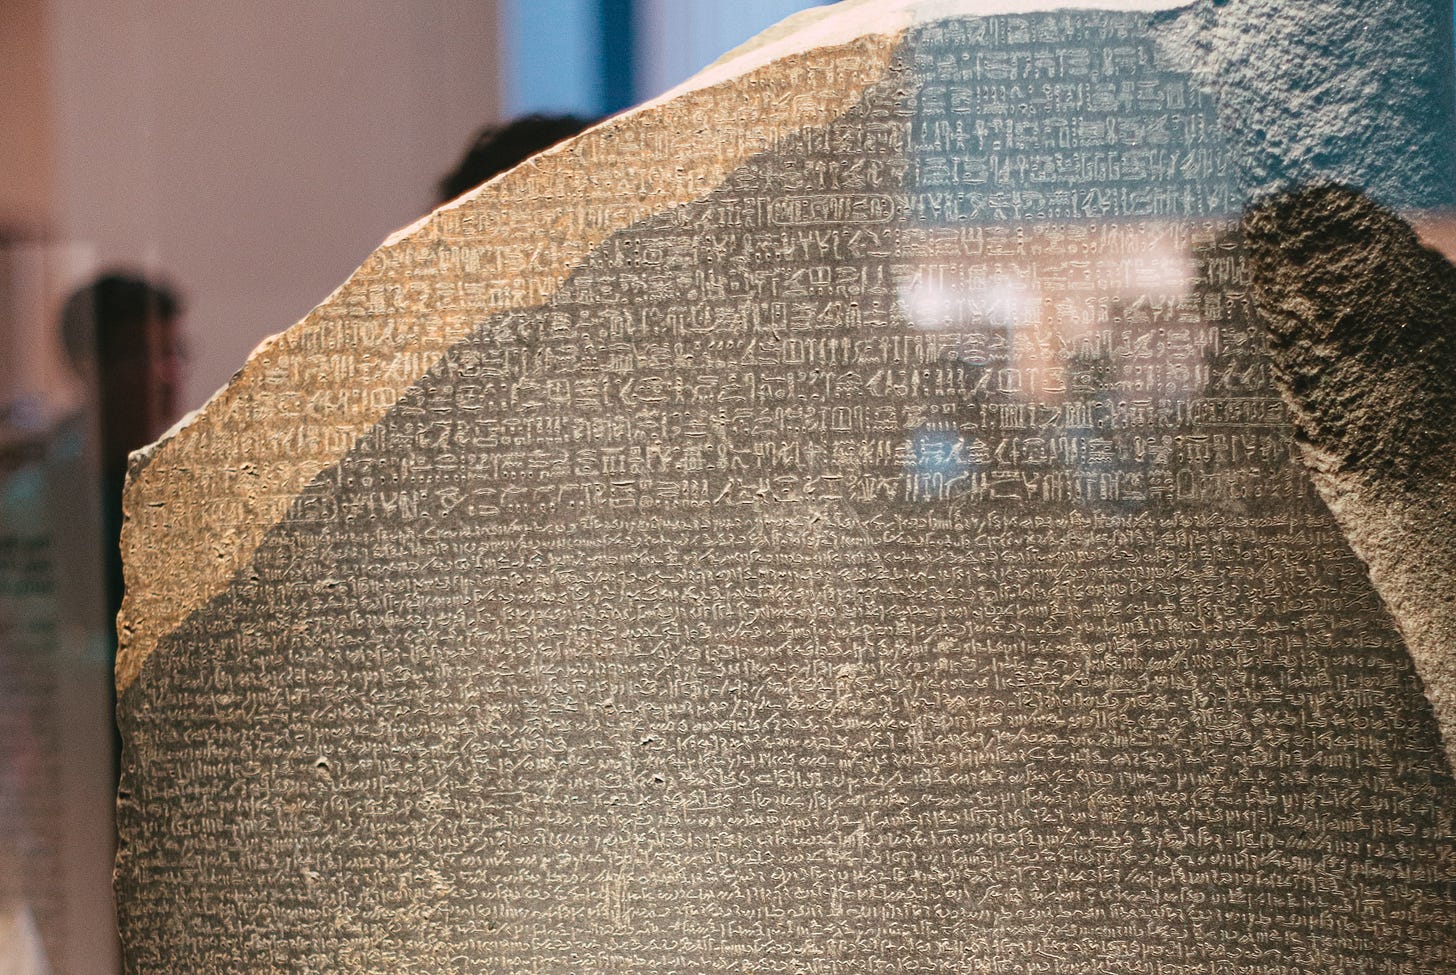 The Rosetta Stone (https://en.wikipedia.org/wiki/Rosetta_Stone) changed the course of linguistics.